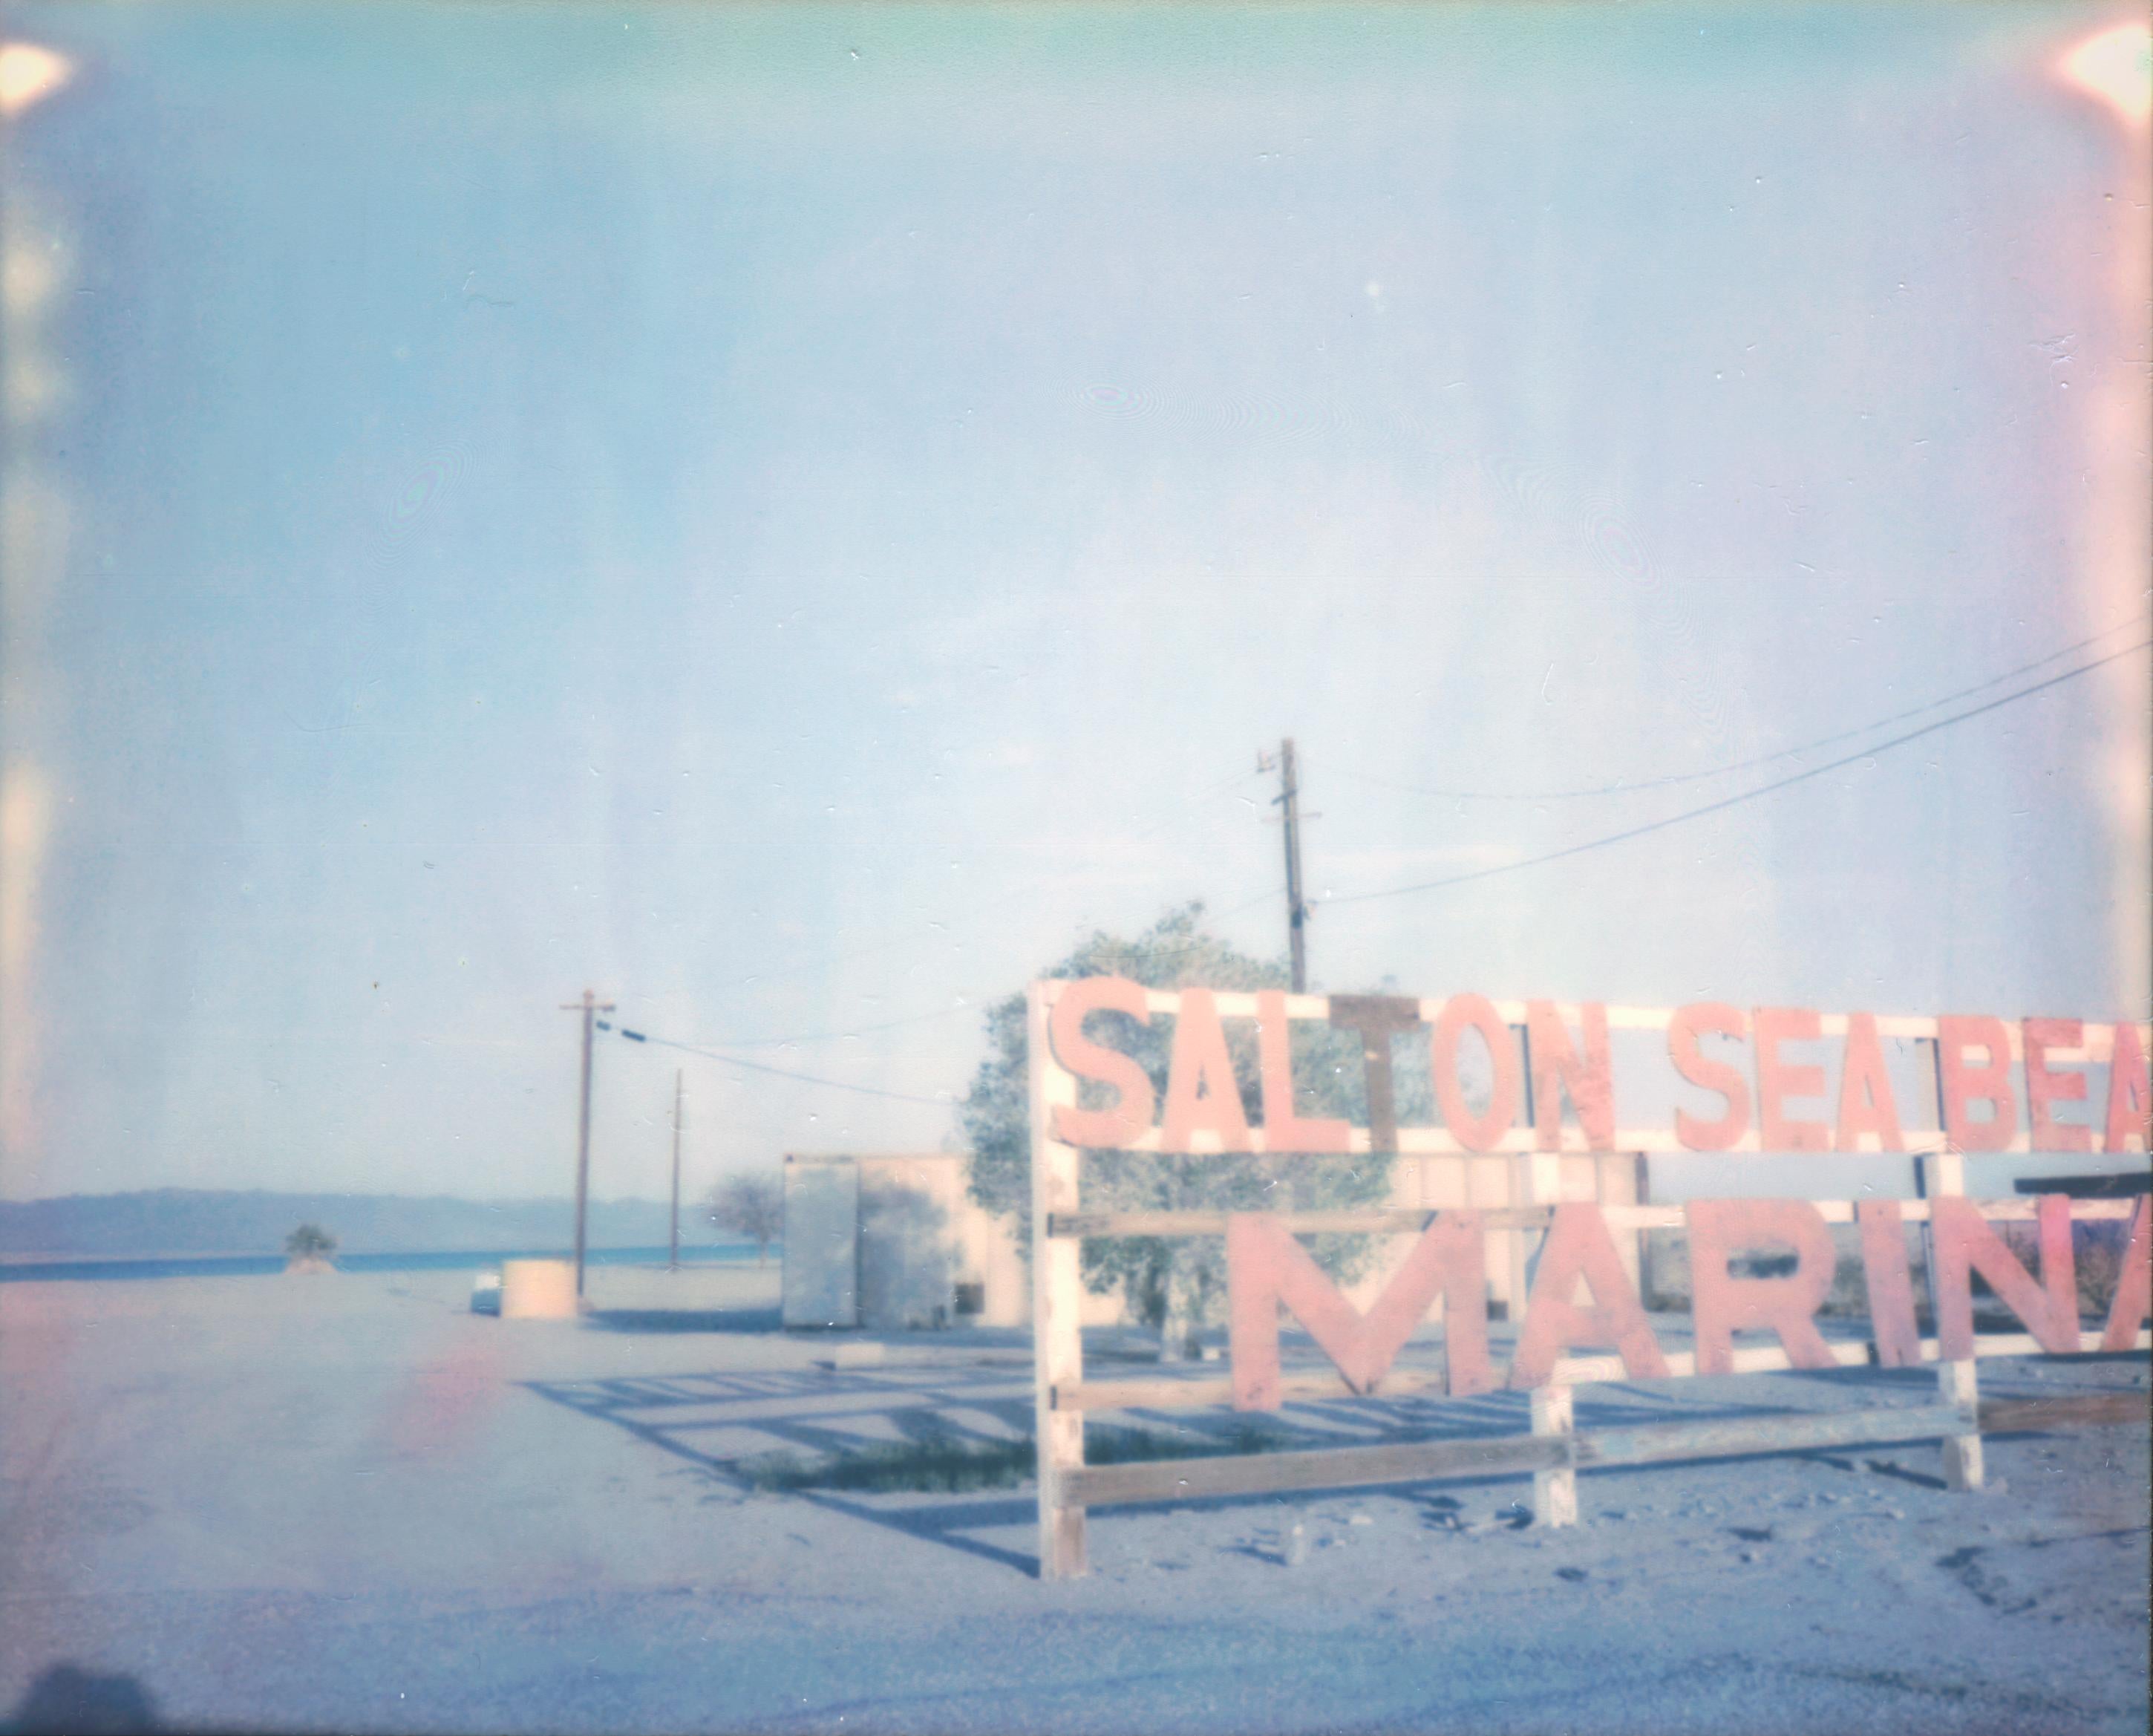 Stefanie Schneider Color Photograph - Salton Sea Beach (California Badlands) - Contemporary, Polaroid, 21st Century